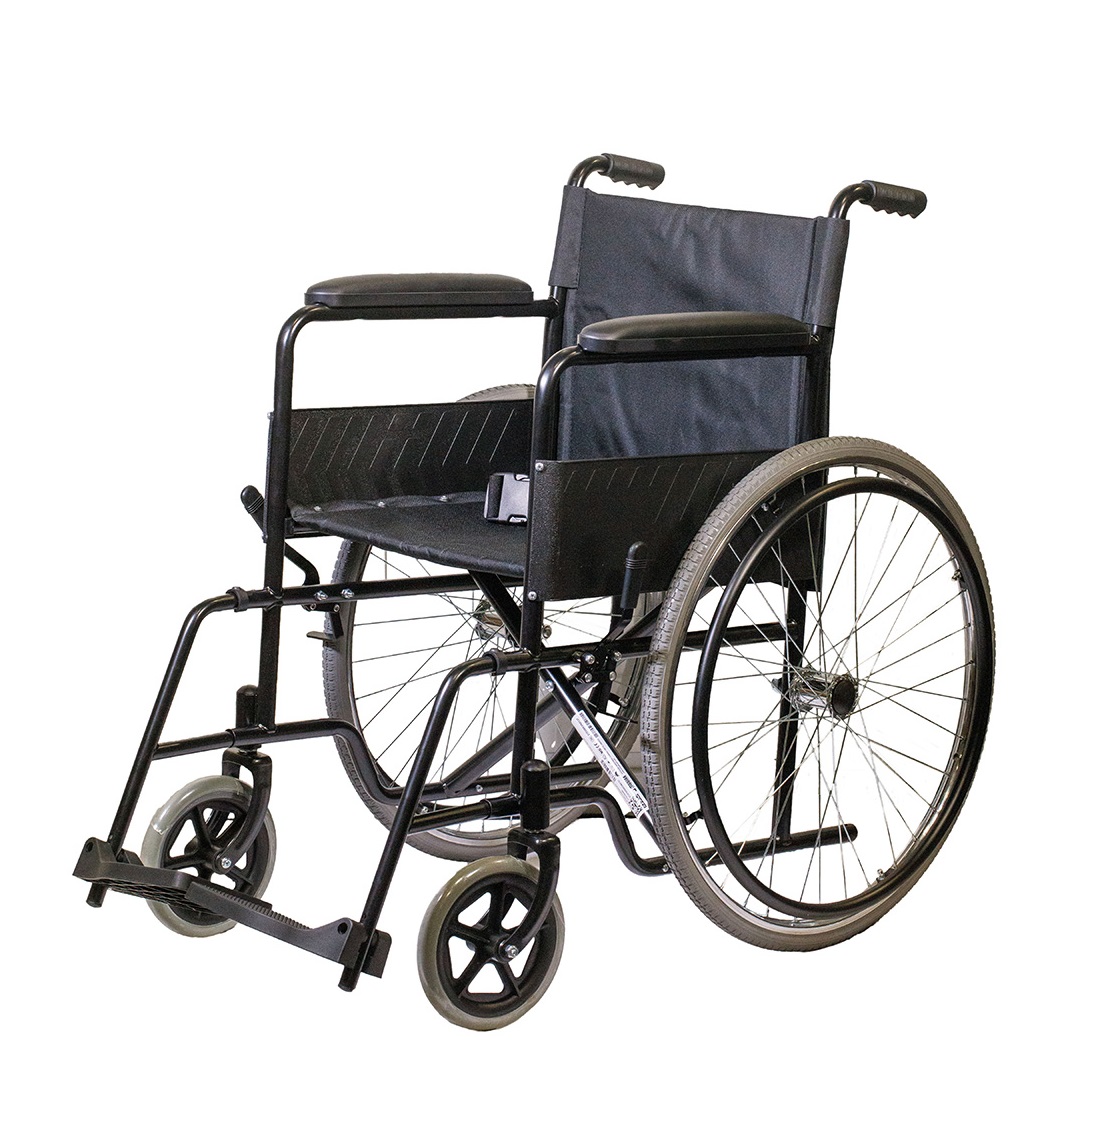 MOBIAK Αναπηρικό Αμαξίδιο Απλού Τύπου Basic Ι 24'' 50 cm Μαύρο 0808383i